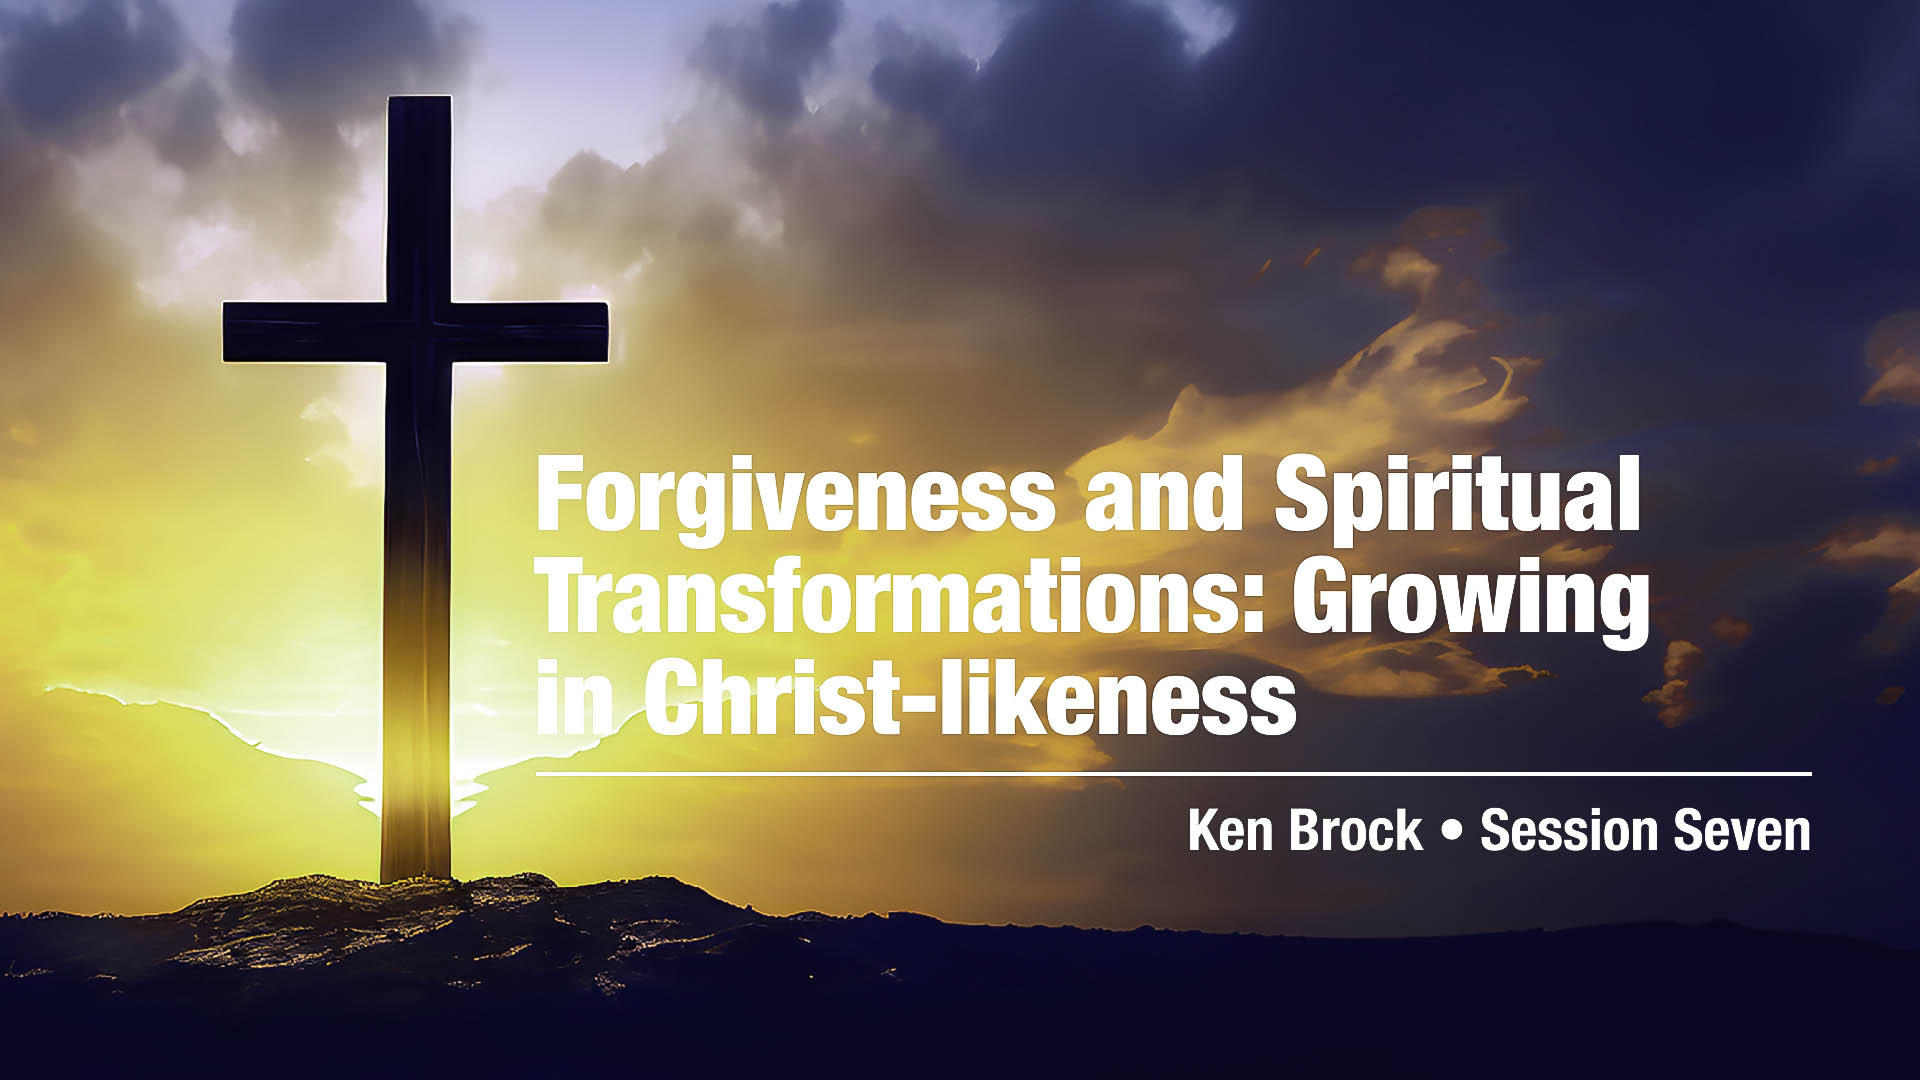 Dunkard Brethren Church| Leadership Conference | Forgiveness And Spiritual Transformations: Growing In Christ-likeness